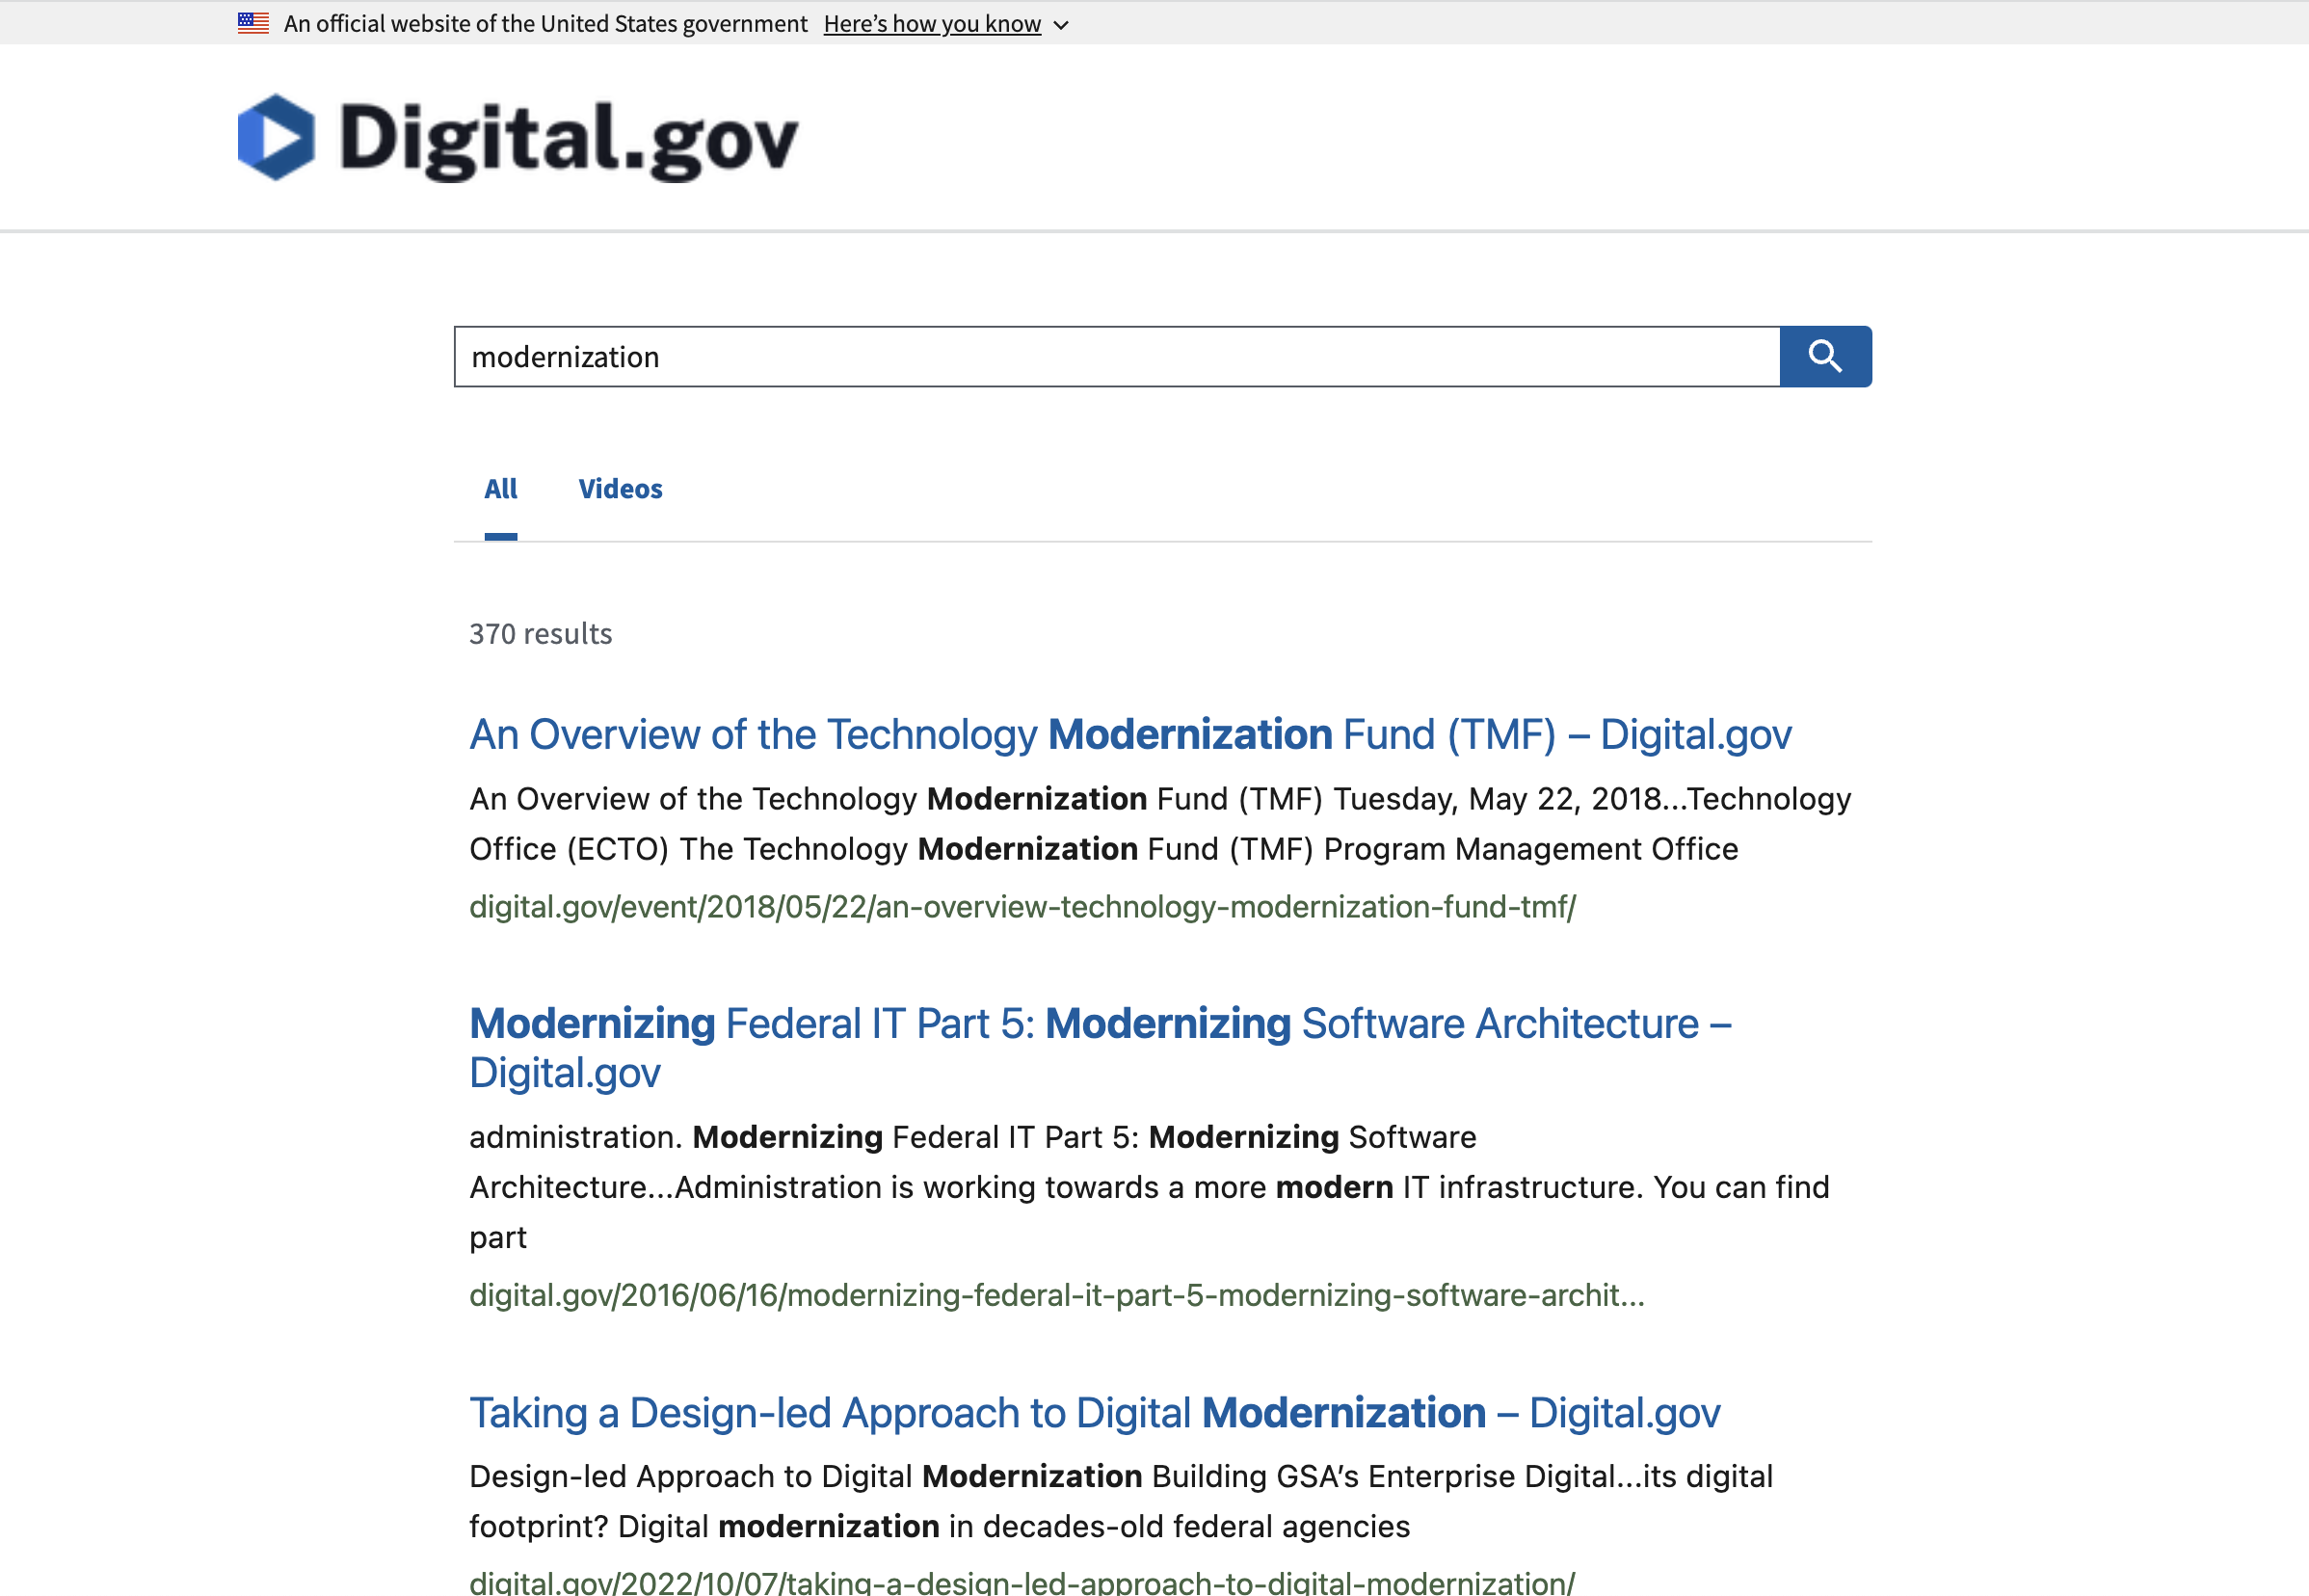 Search results on digital.gov for the term 'modernization'